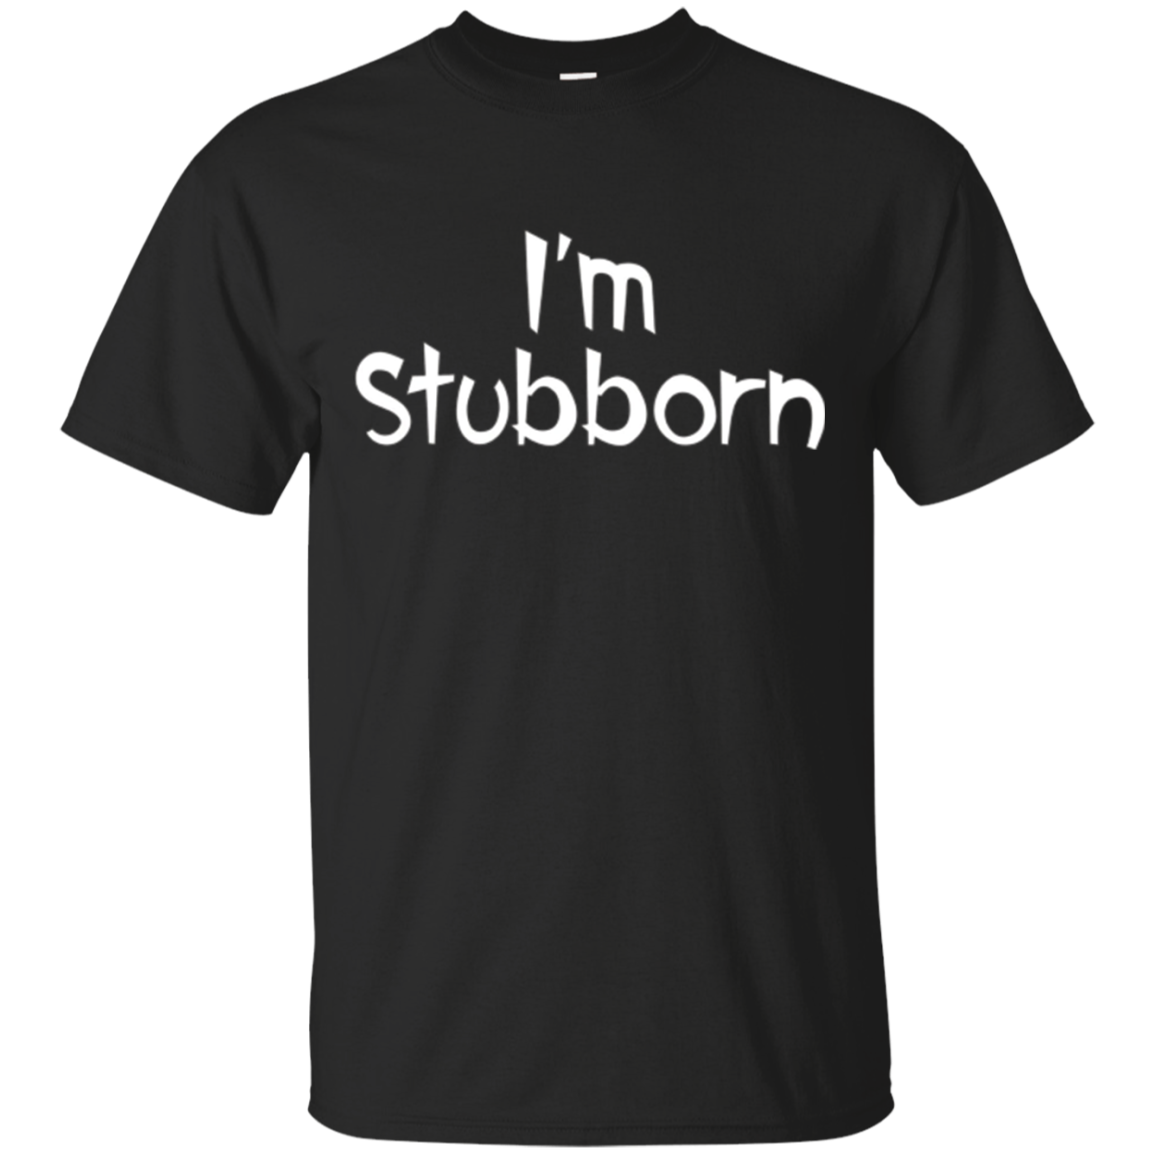 I'm Stubborn Personality Sassy Edgy Funny T-Shirt.